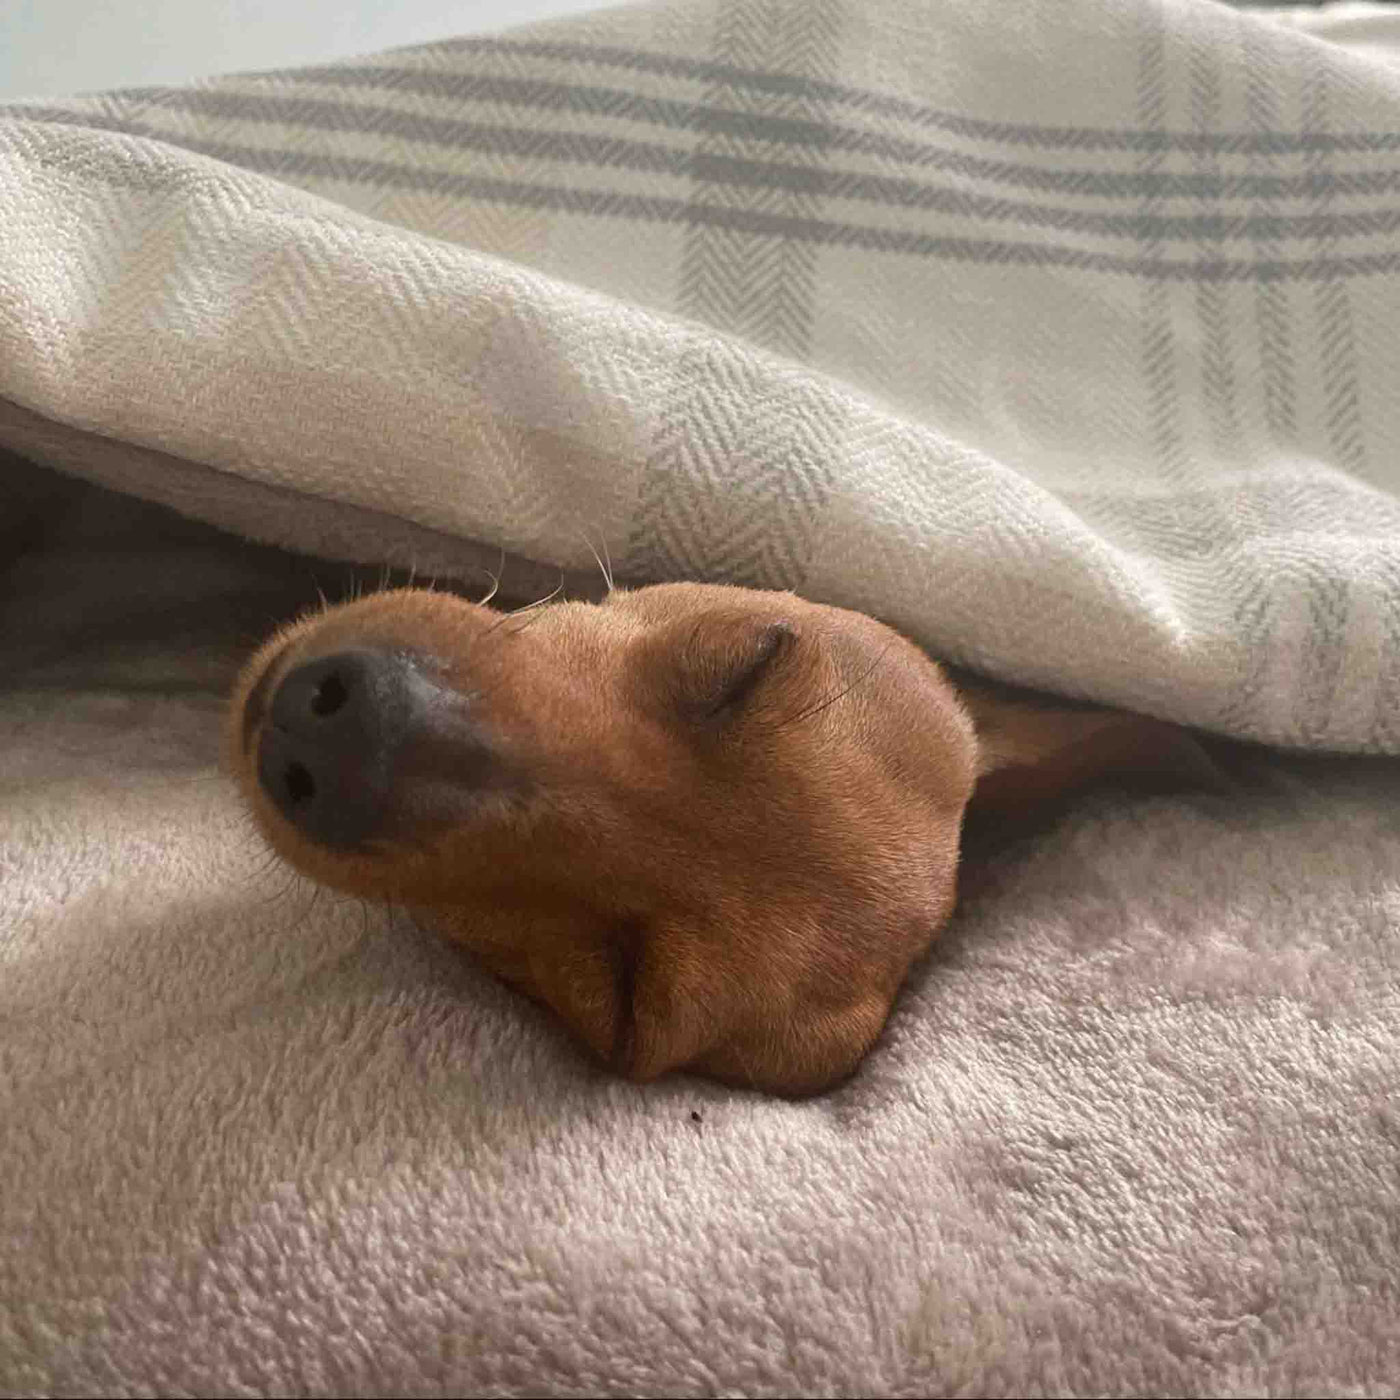 Natural Check Doggy Den Bed